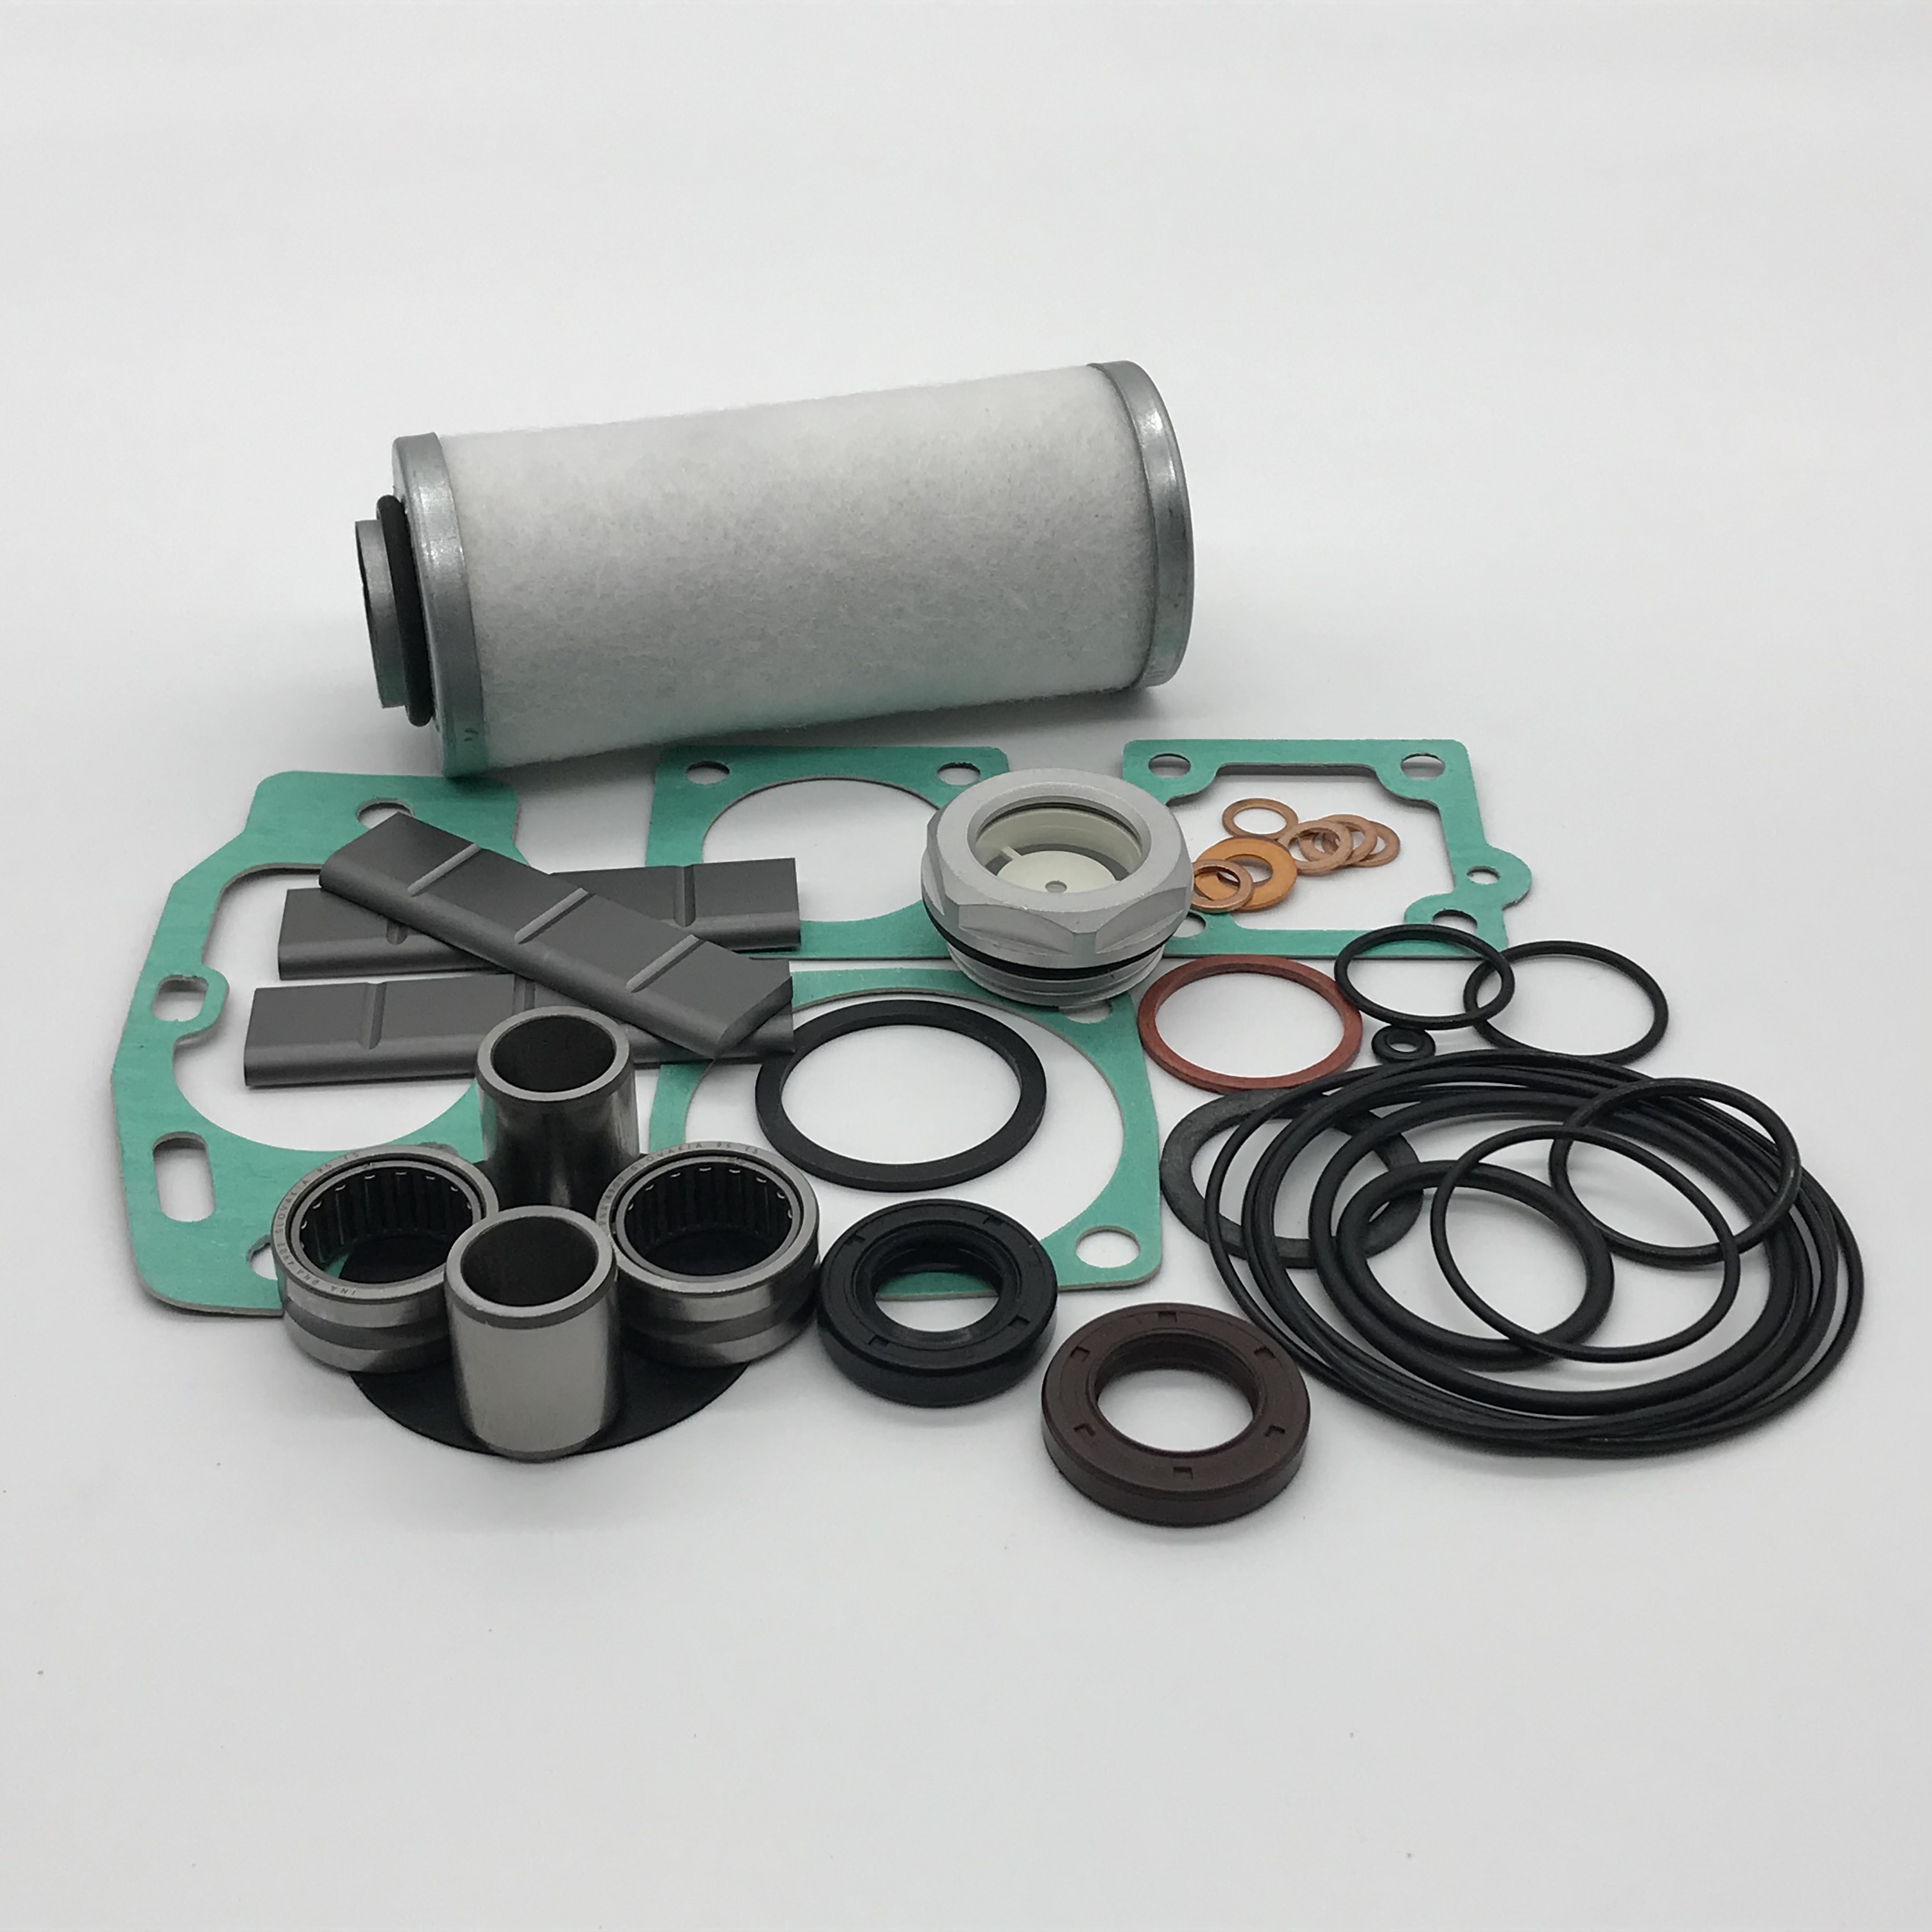 Overhaul repair kit - 0010C - PN : PPB0010C-MK for Busch Vacuum vacuum pump R5 RA RC RE KB EVA Your spare parts up to 50% cheaper !